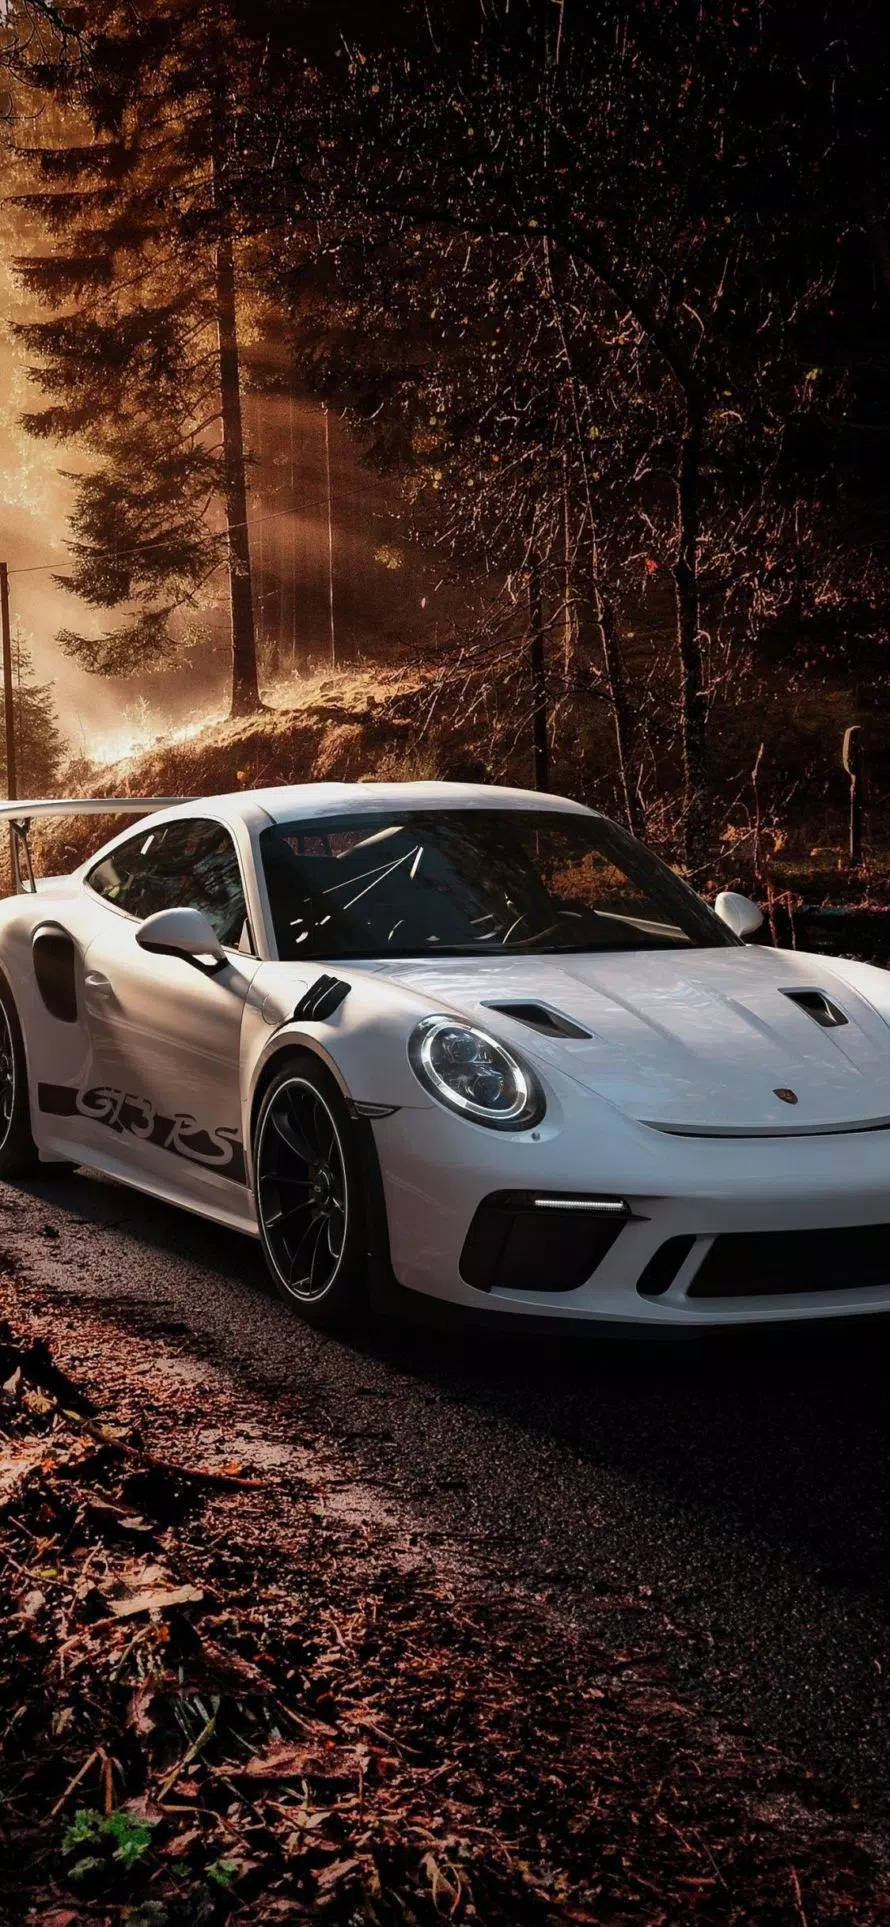 White Porsche 911 In The Forest Wallpaper